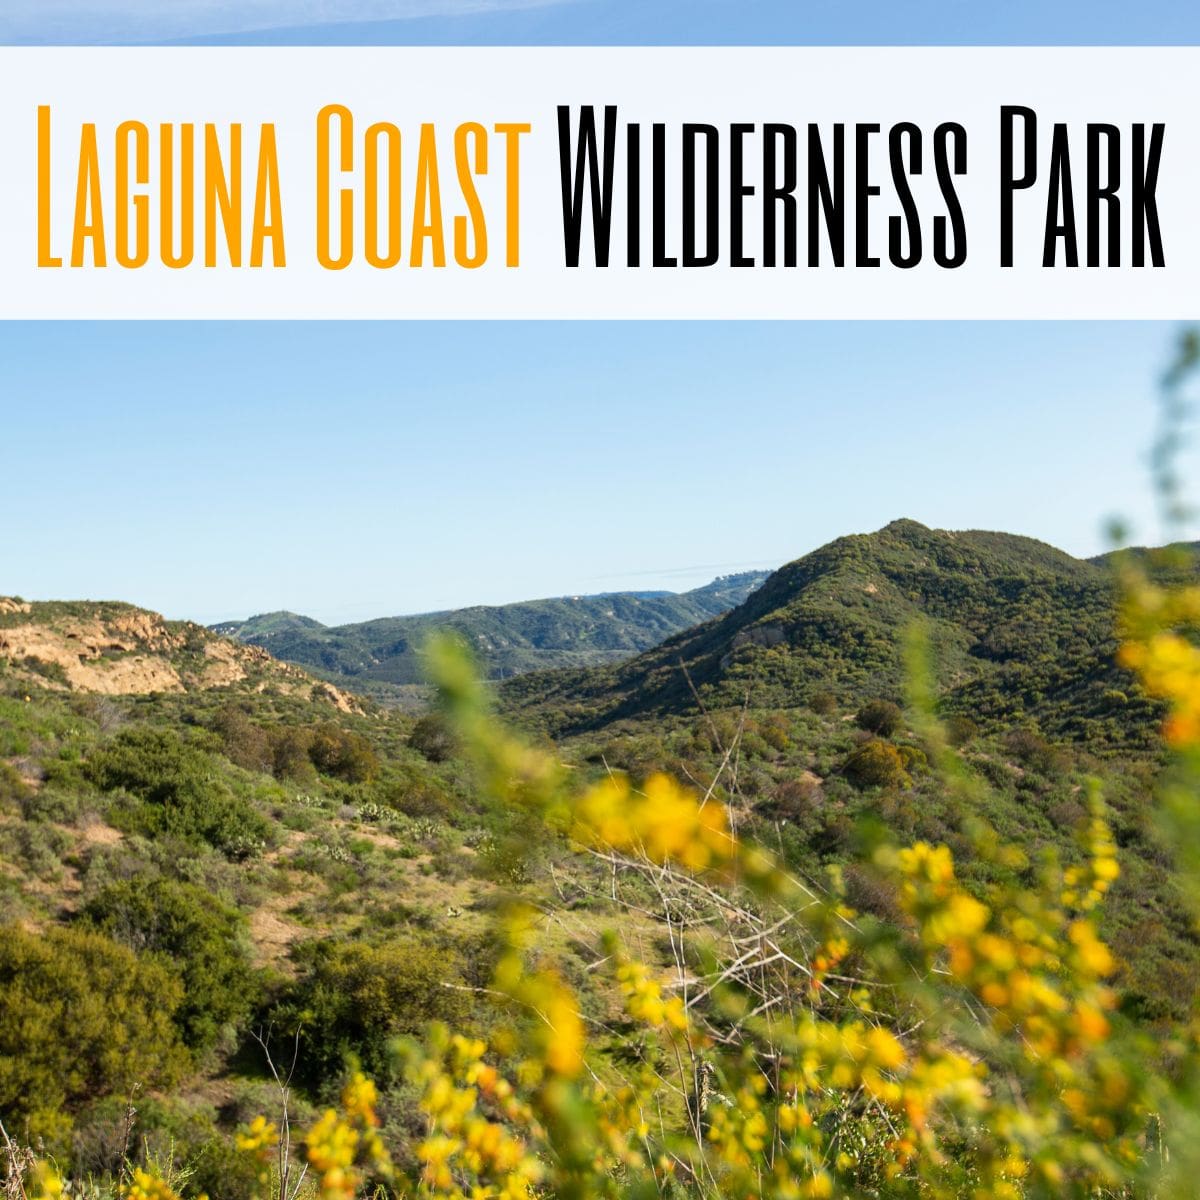 Laguna Coast Wilderness Park